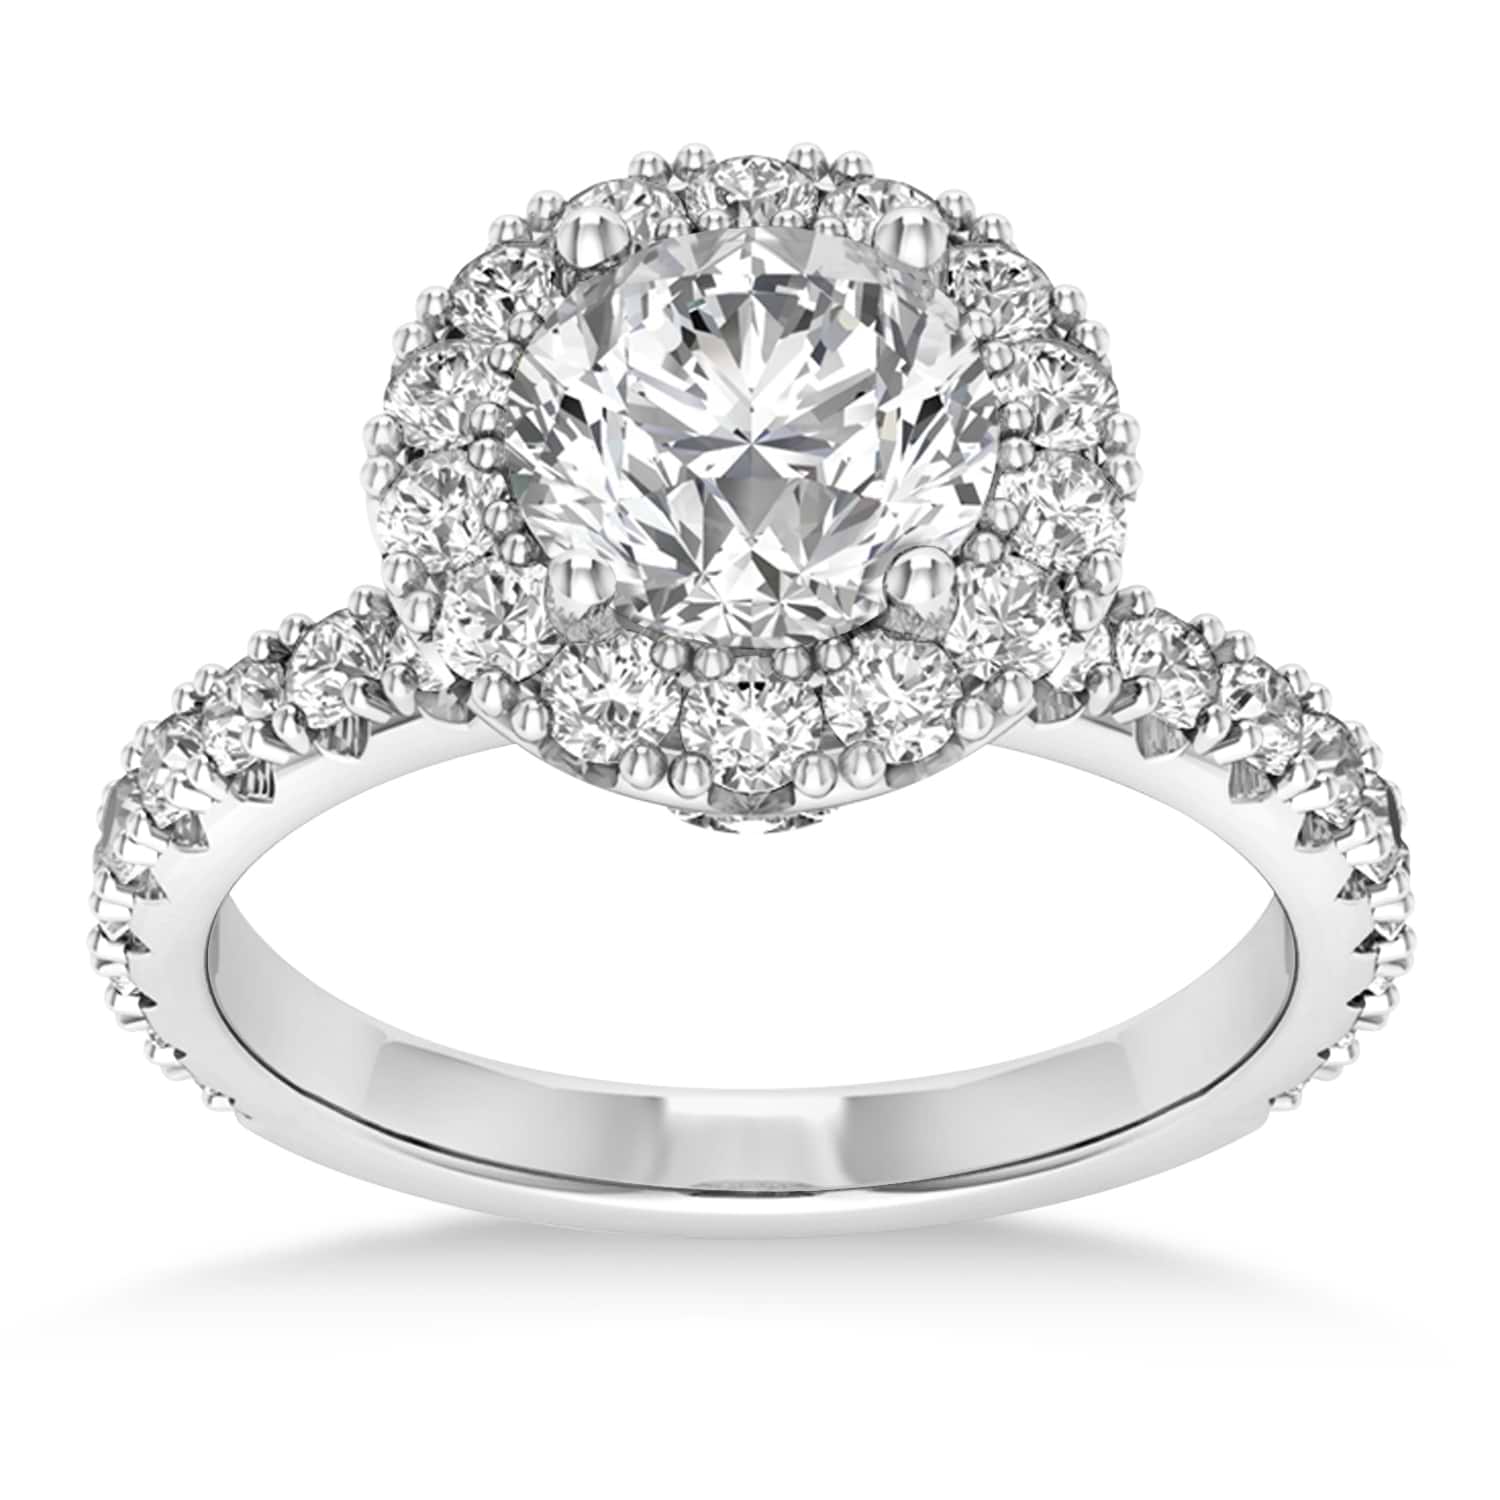 Diamond Halo Engagement Ring 18k White Gold (0.90ct)